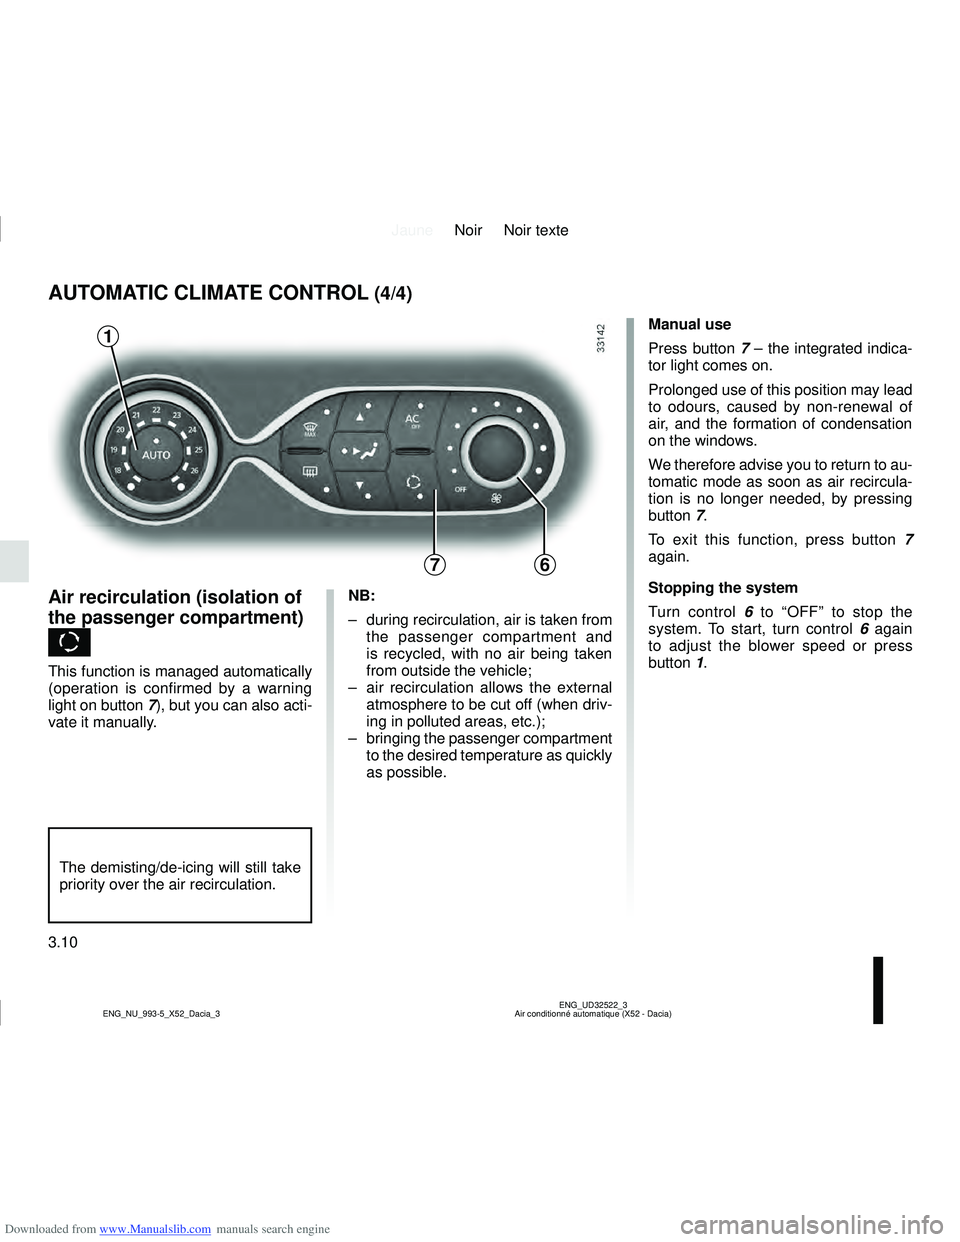 DACIA SANDERO 2017  Owners Manual Downloaded from www.Manualslib.com manuals search engine JauneNoir Noir texte
3.10
ENG_UD32522_3
Air conditionné automatique (X52 - Dacia)
ENG_NU_993-5_X52_Dacia_3
AUTOMATIC CLIMATE CONTROL (4/4)
76
